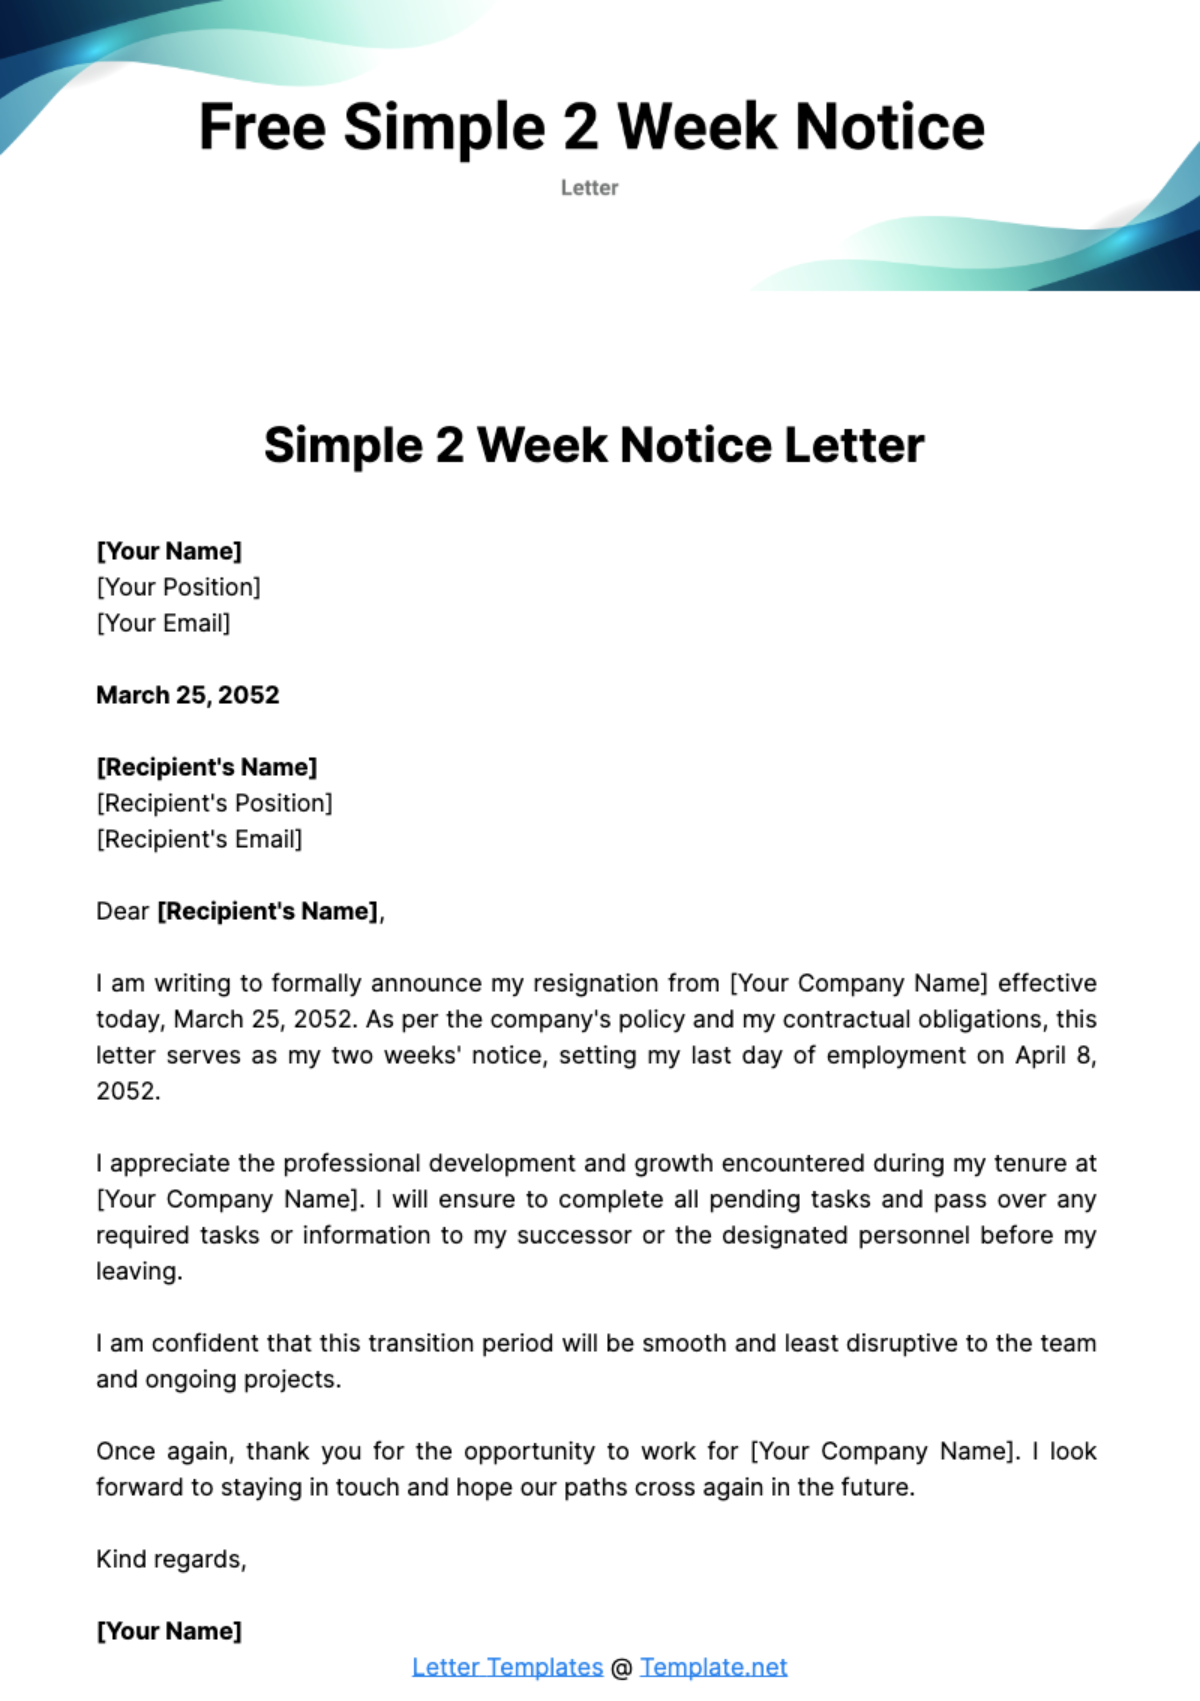 Free Simple 2 Week Notice Letter Template